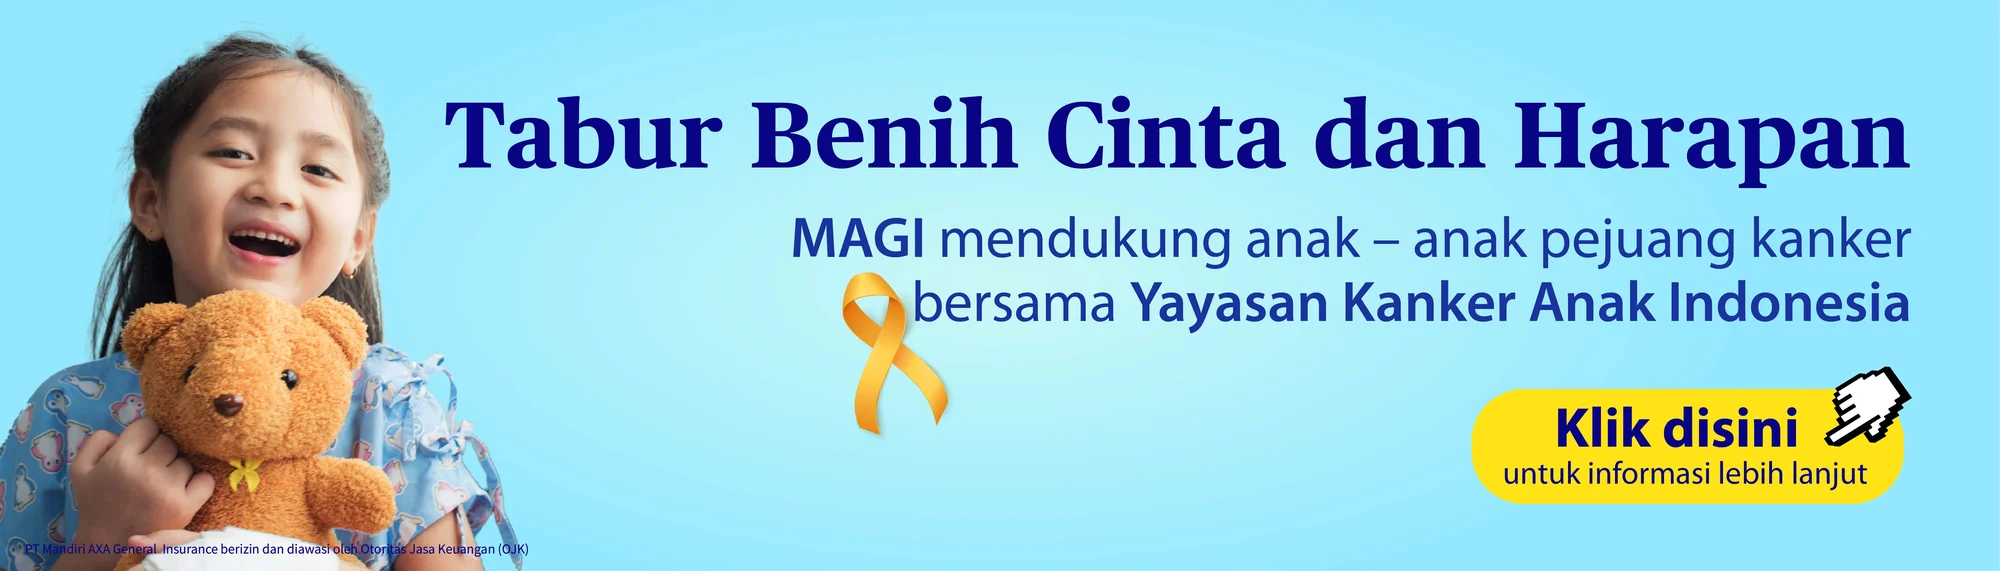 banner-tabur-benih-cinta-dan-harapan-bersama-yayasan-kanker-anak-indonesia